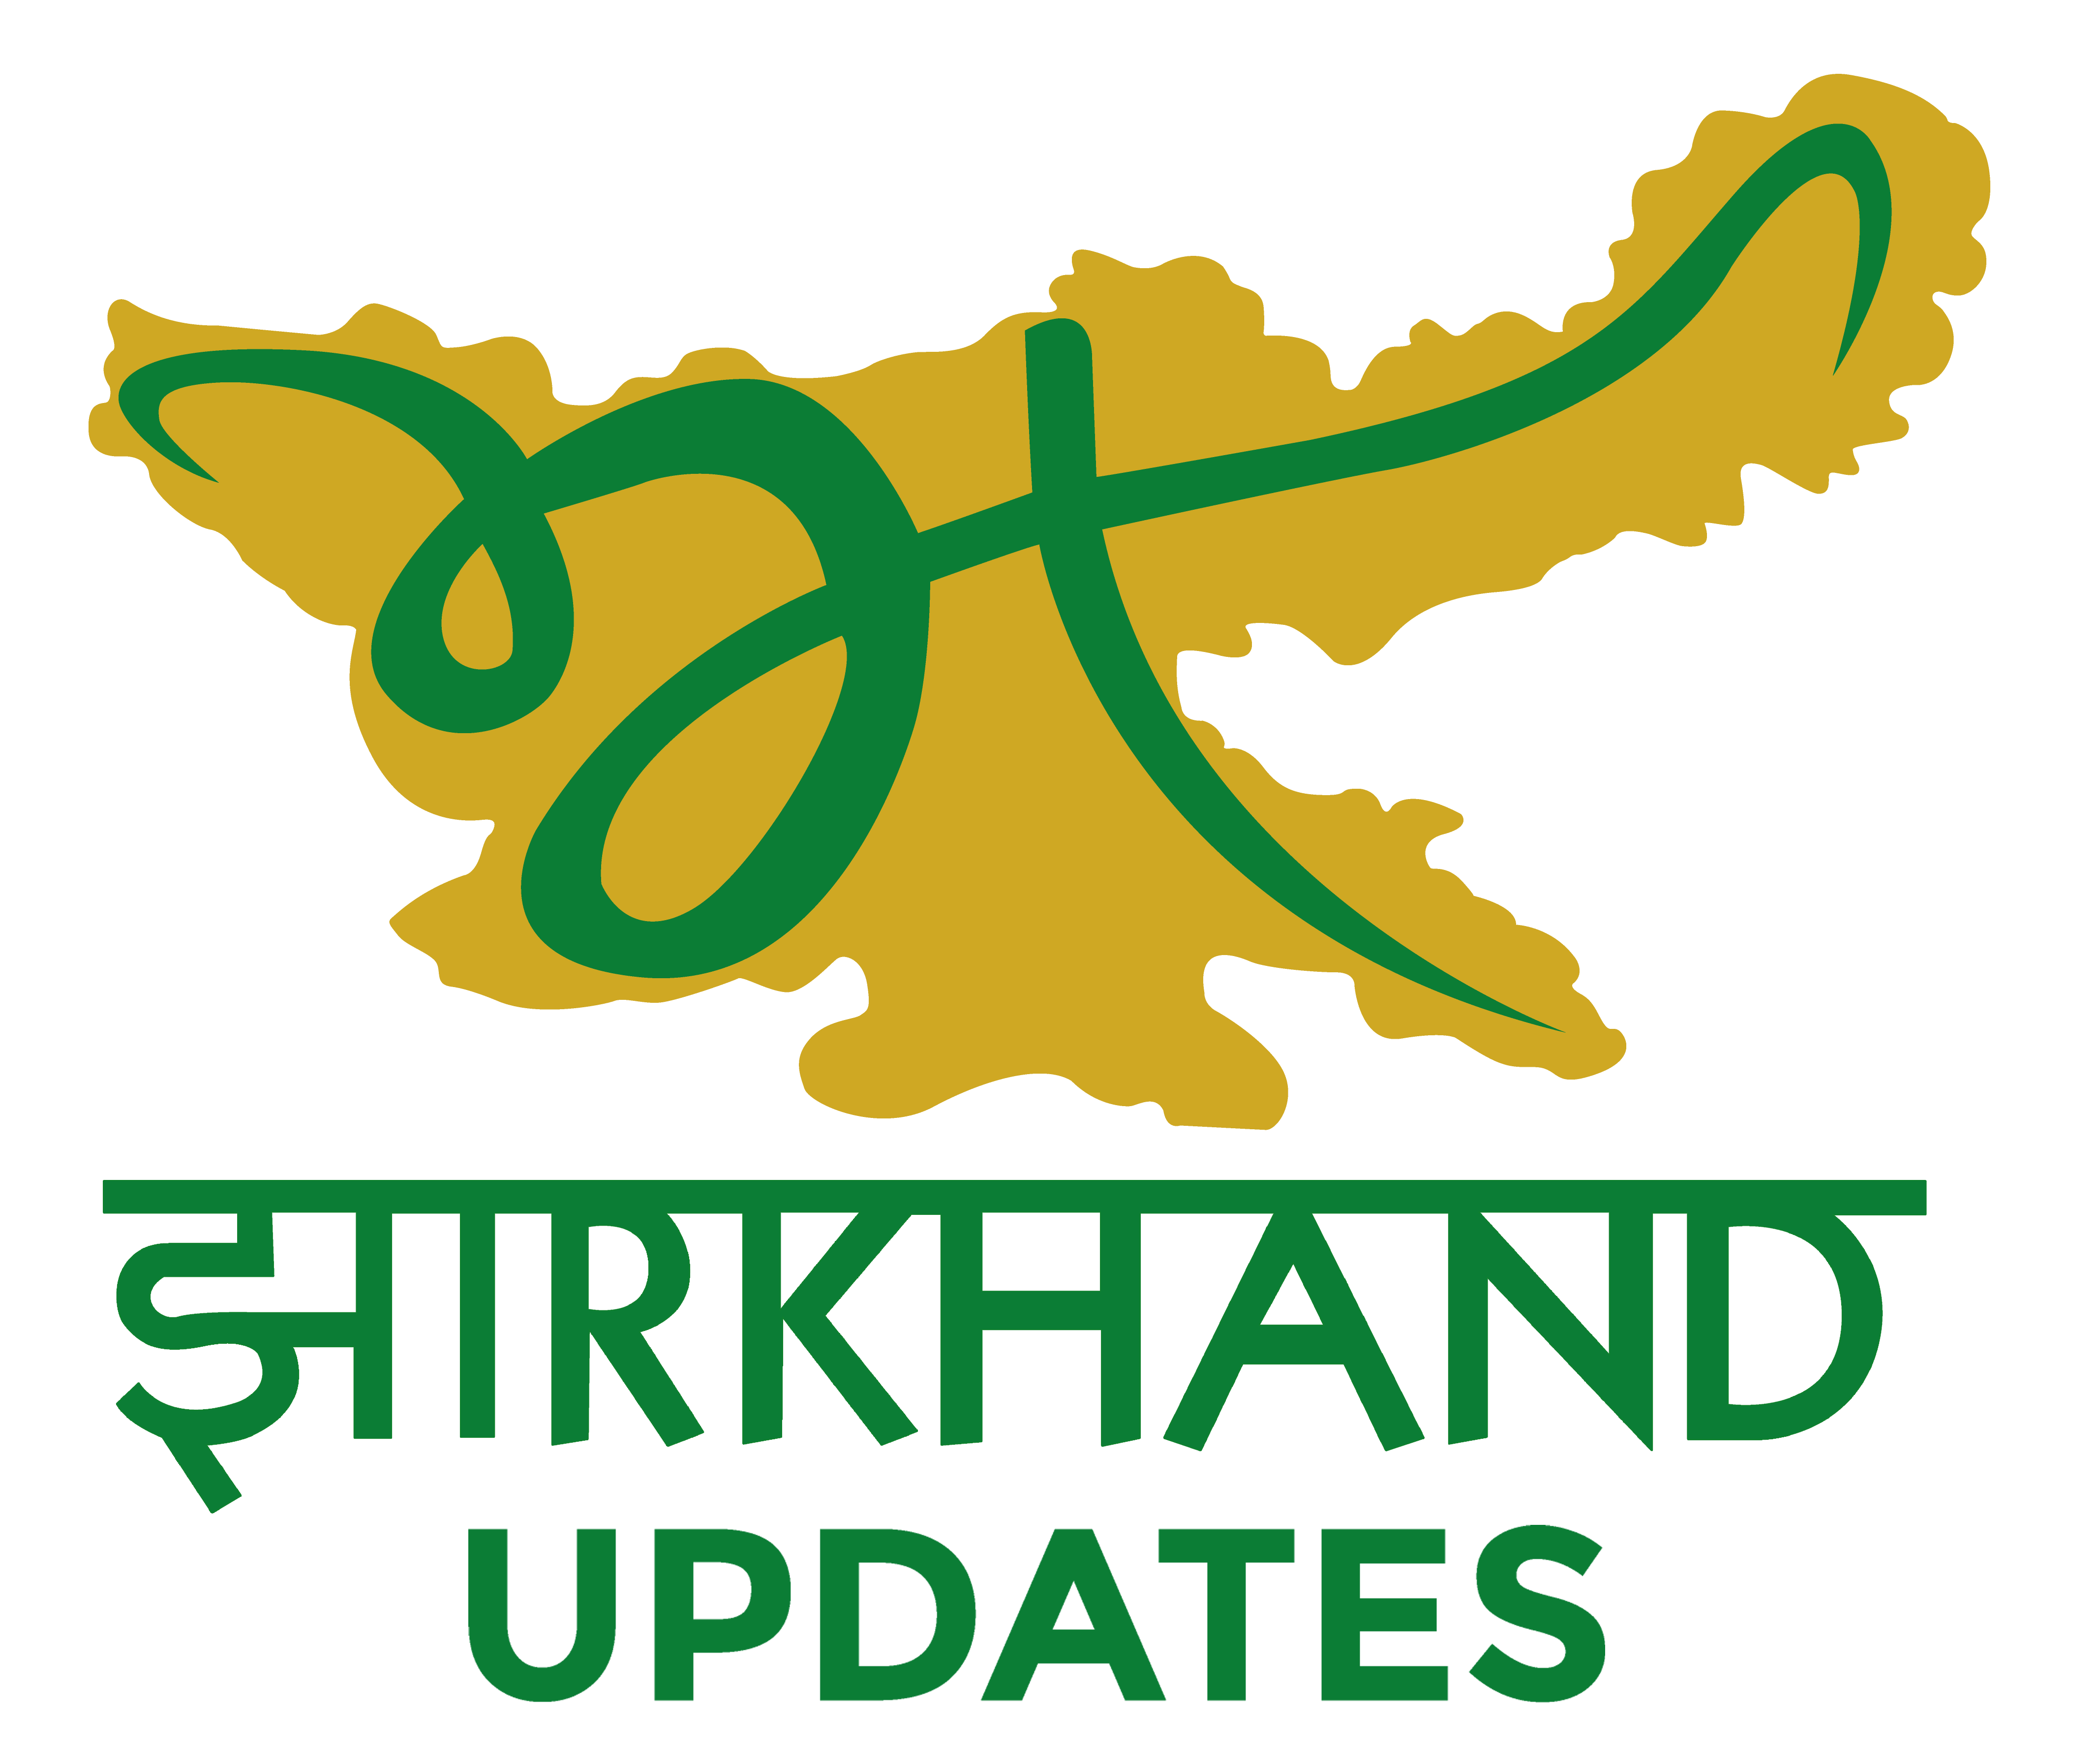 Jharkhand Updates